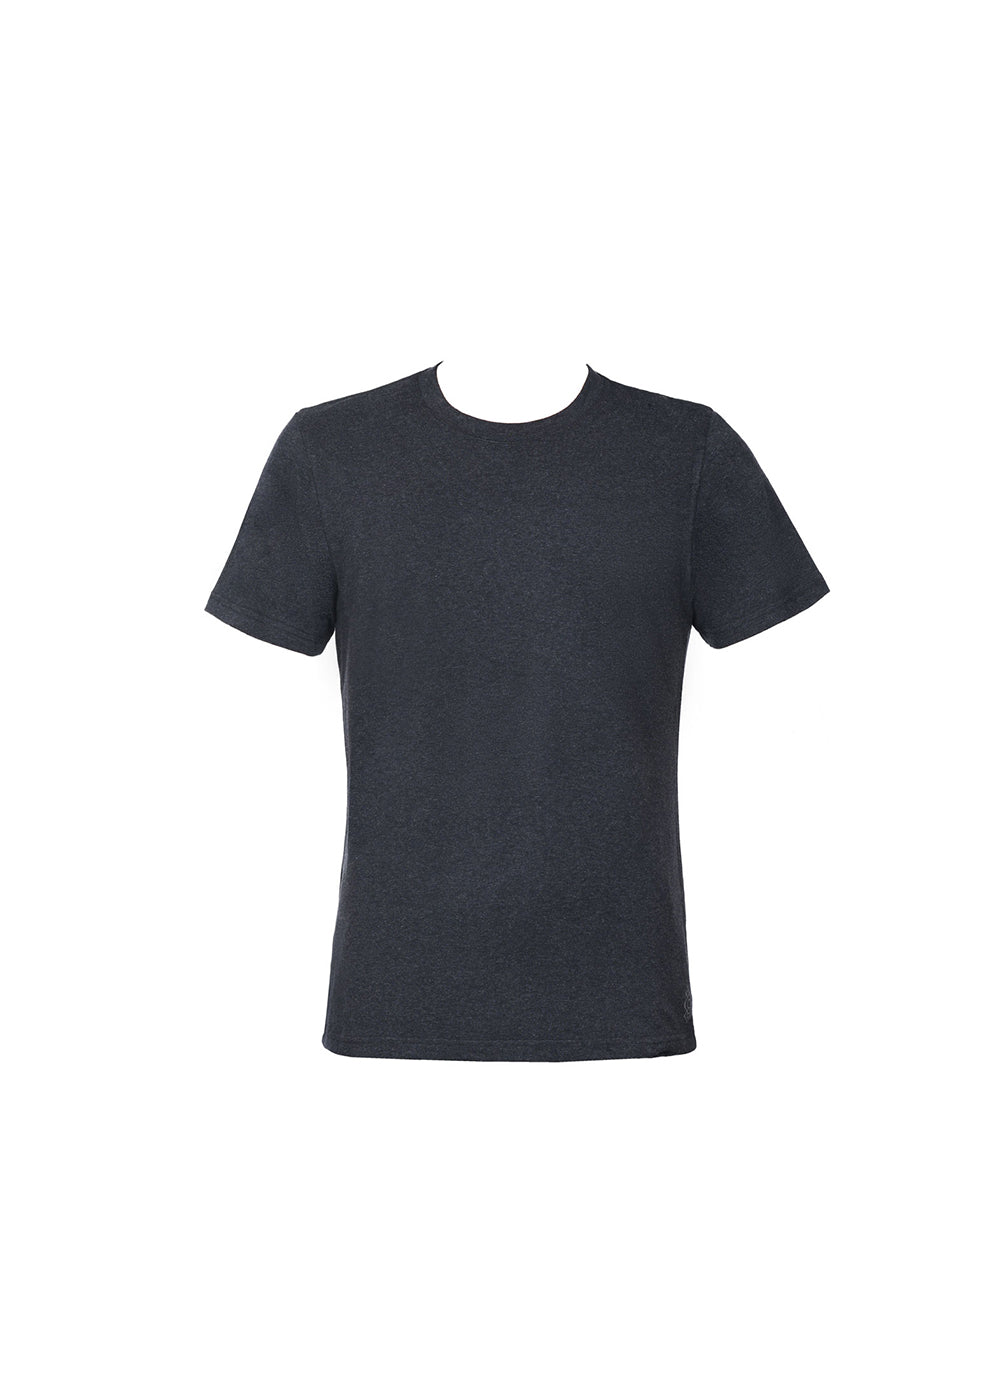 Nomads Hemp Wear Bamboo Fibre Magnetic Tee Shirt in Black Mens Clothing Brand Tantrika Australia